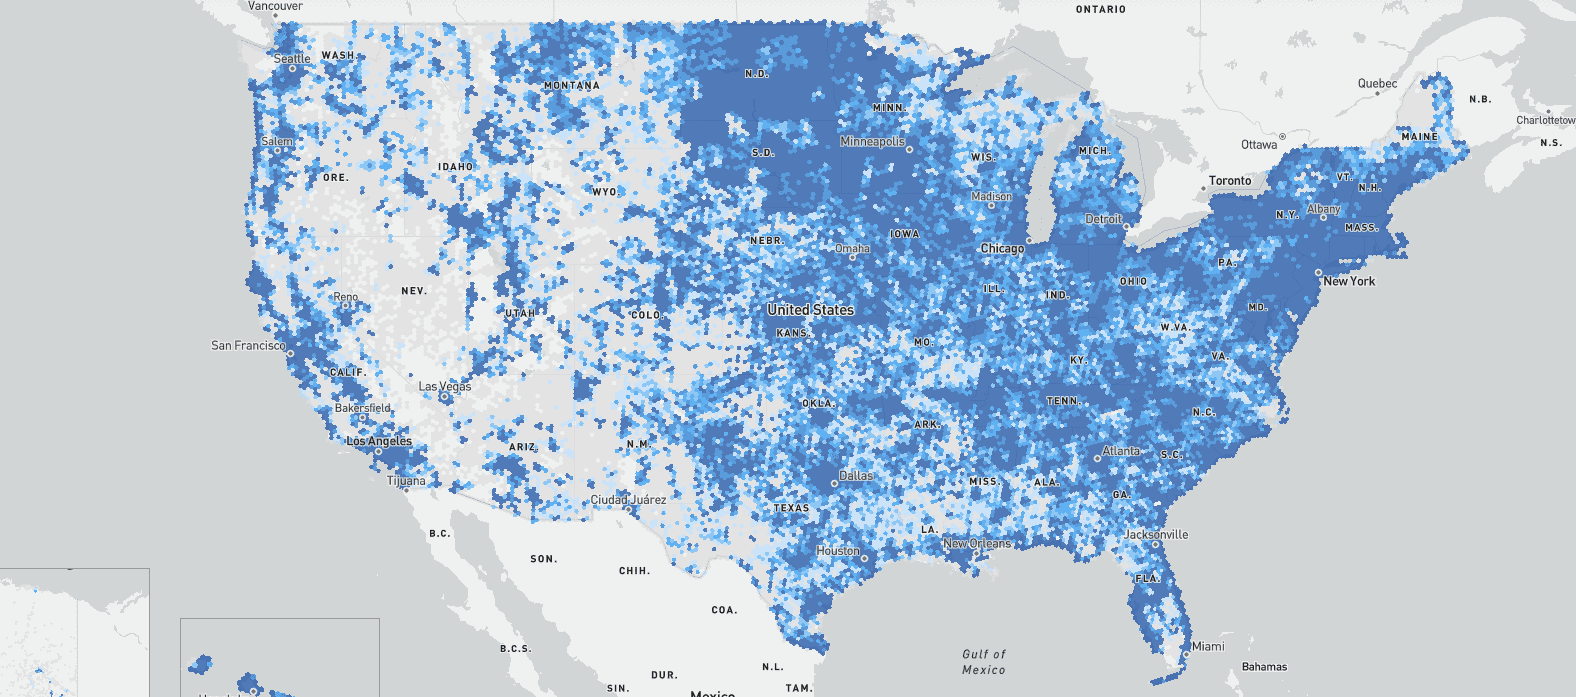 Broadband Map